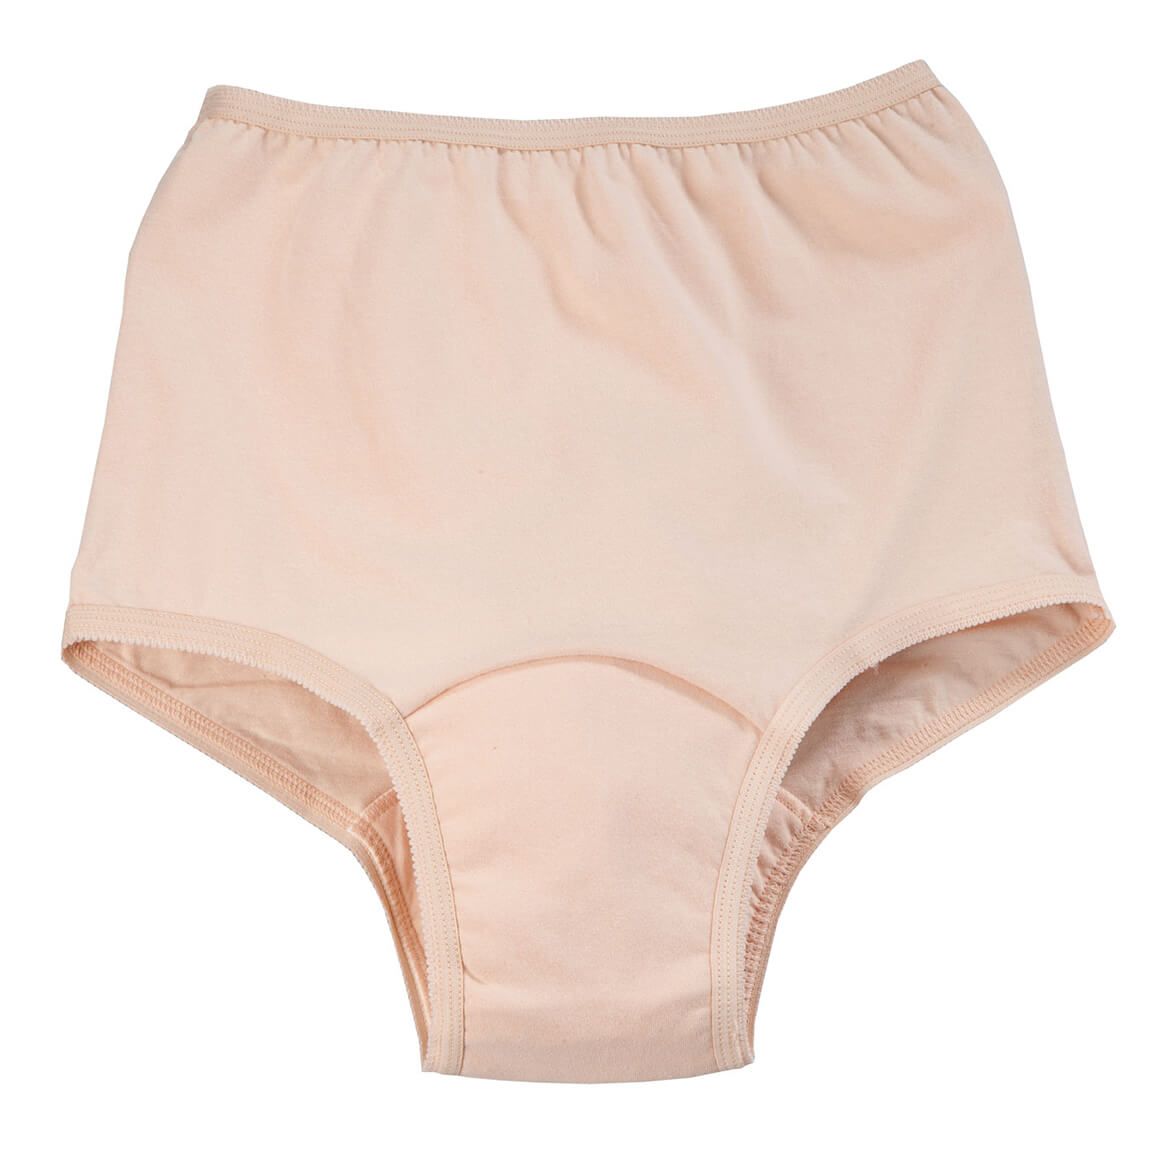 Wearever Reusable Women's Cotton Comfort Incontinence Panty Large